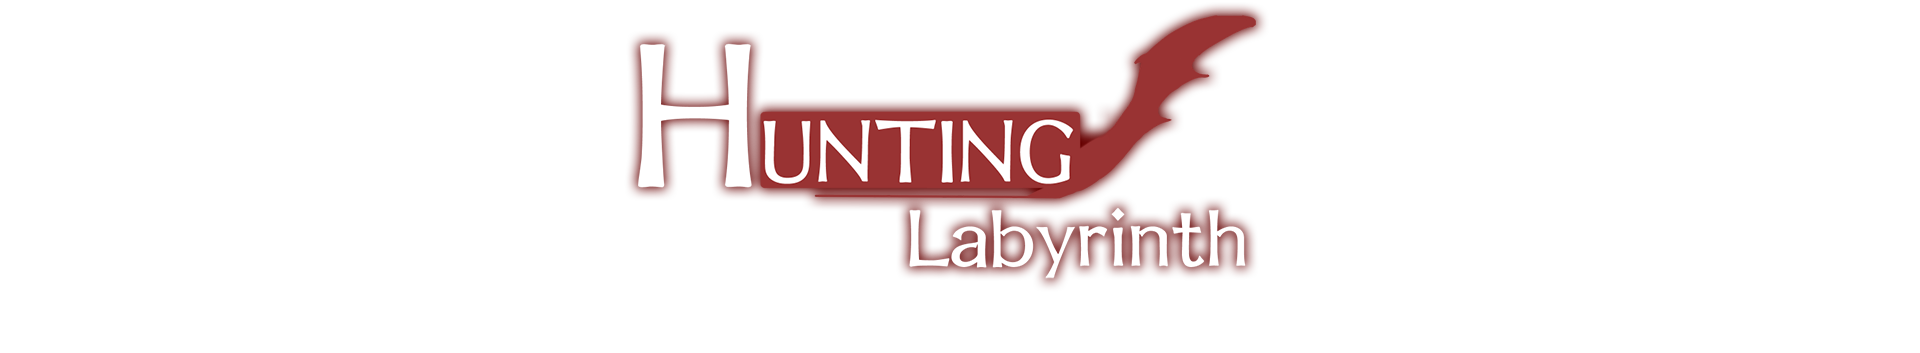 Hunting Labyrinth